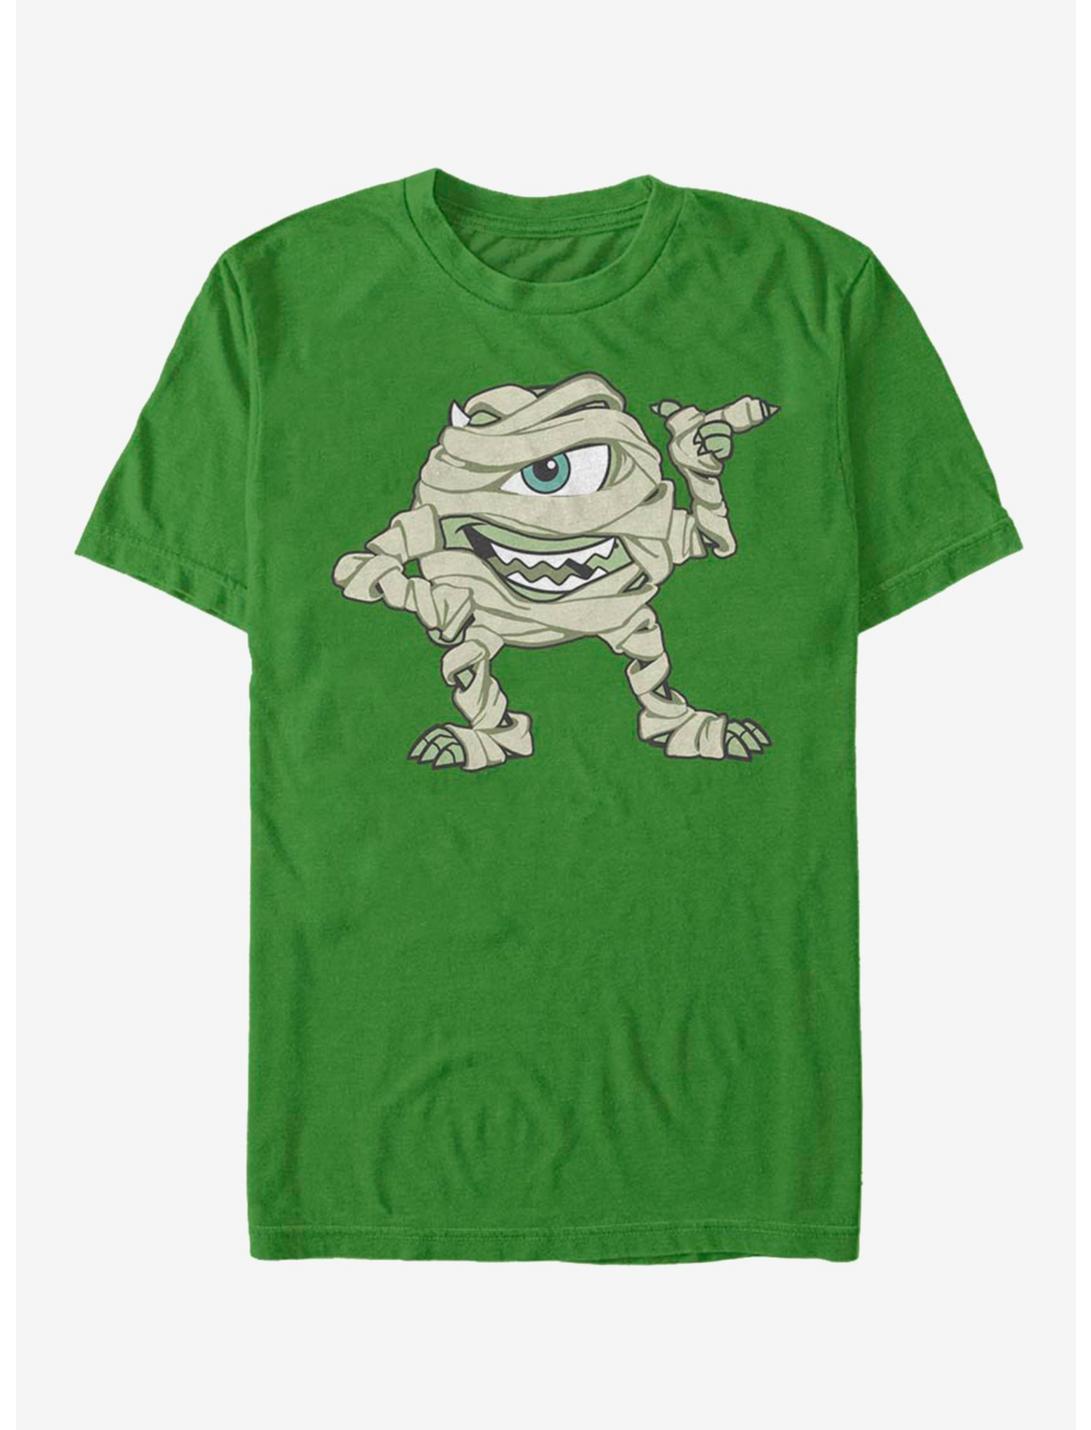 Disney Pixar Monsters University Mummy Mike T-Shirt, KELLY, hi-res